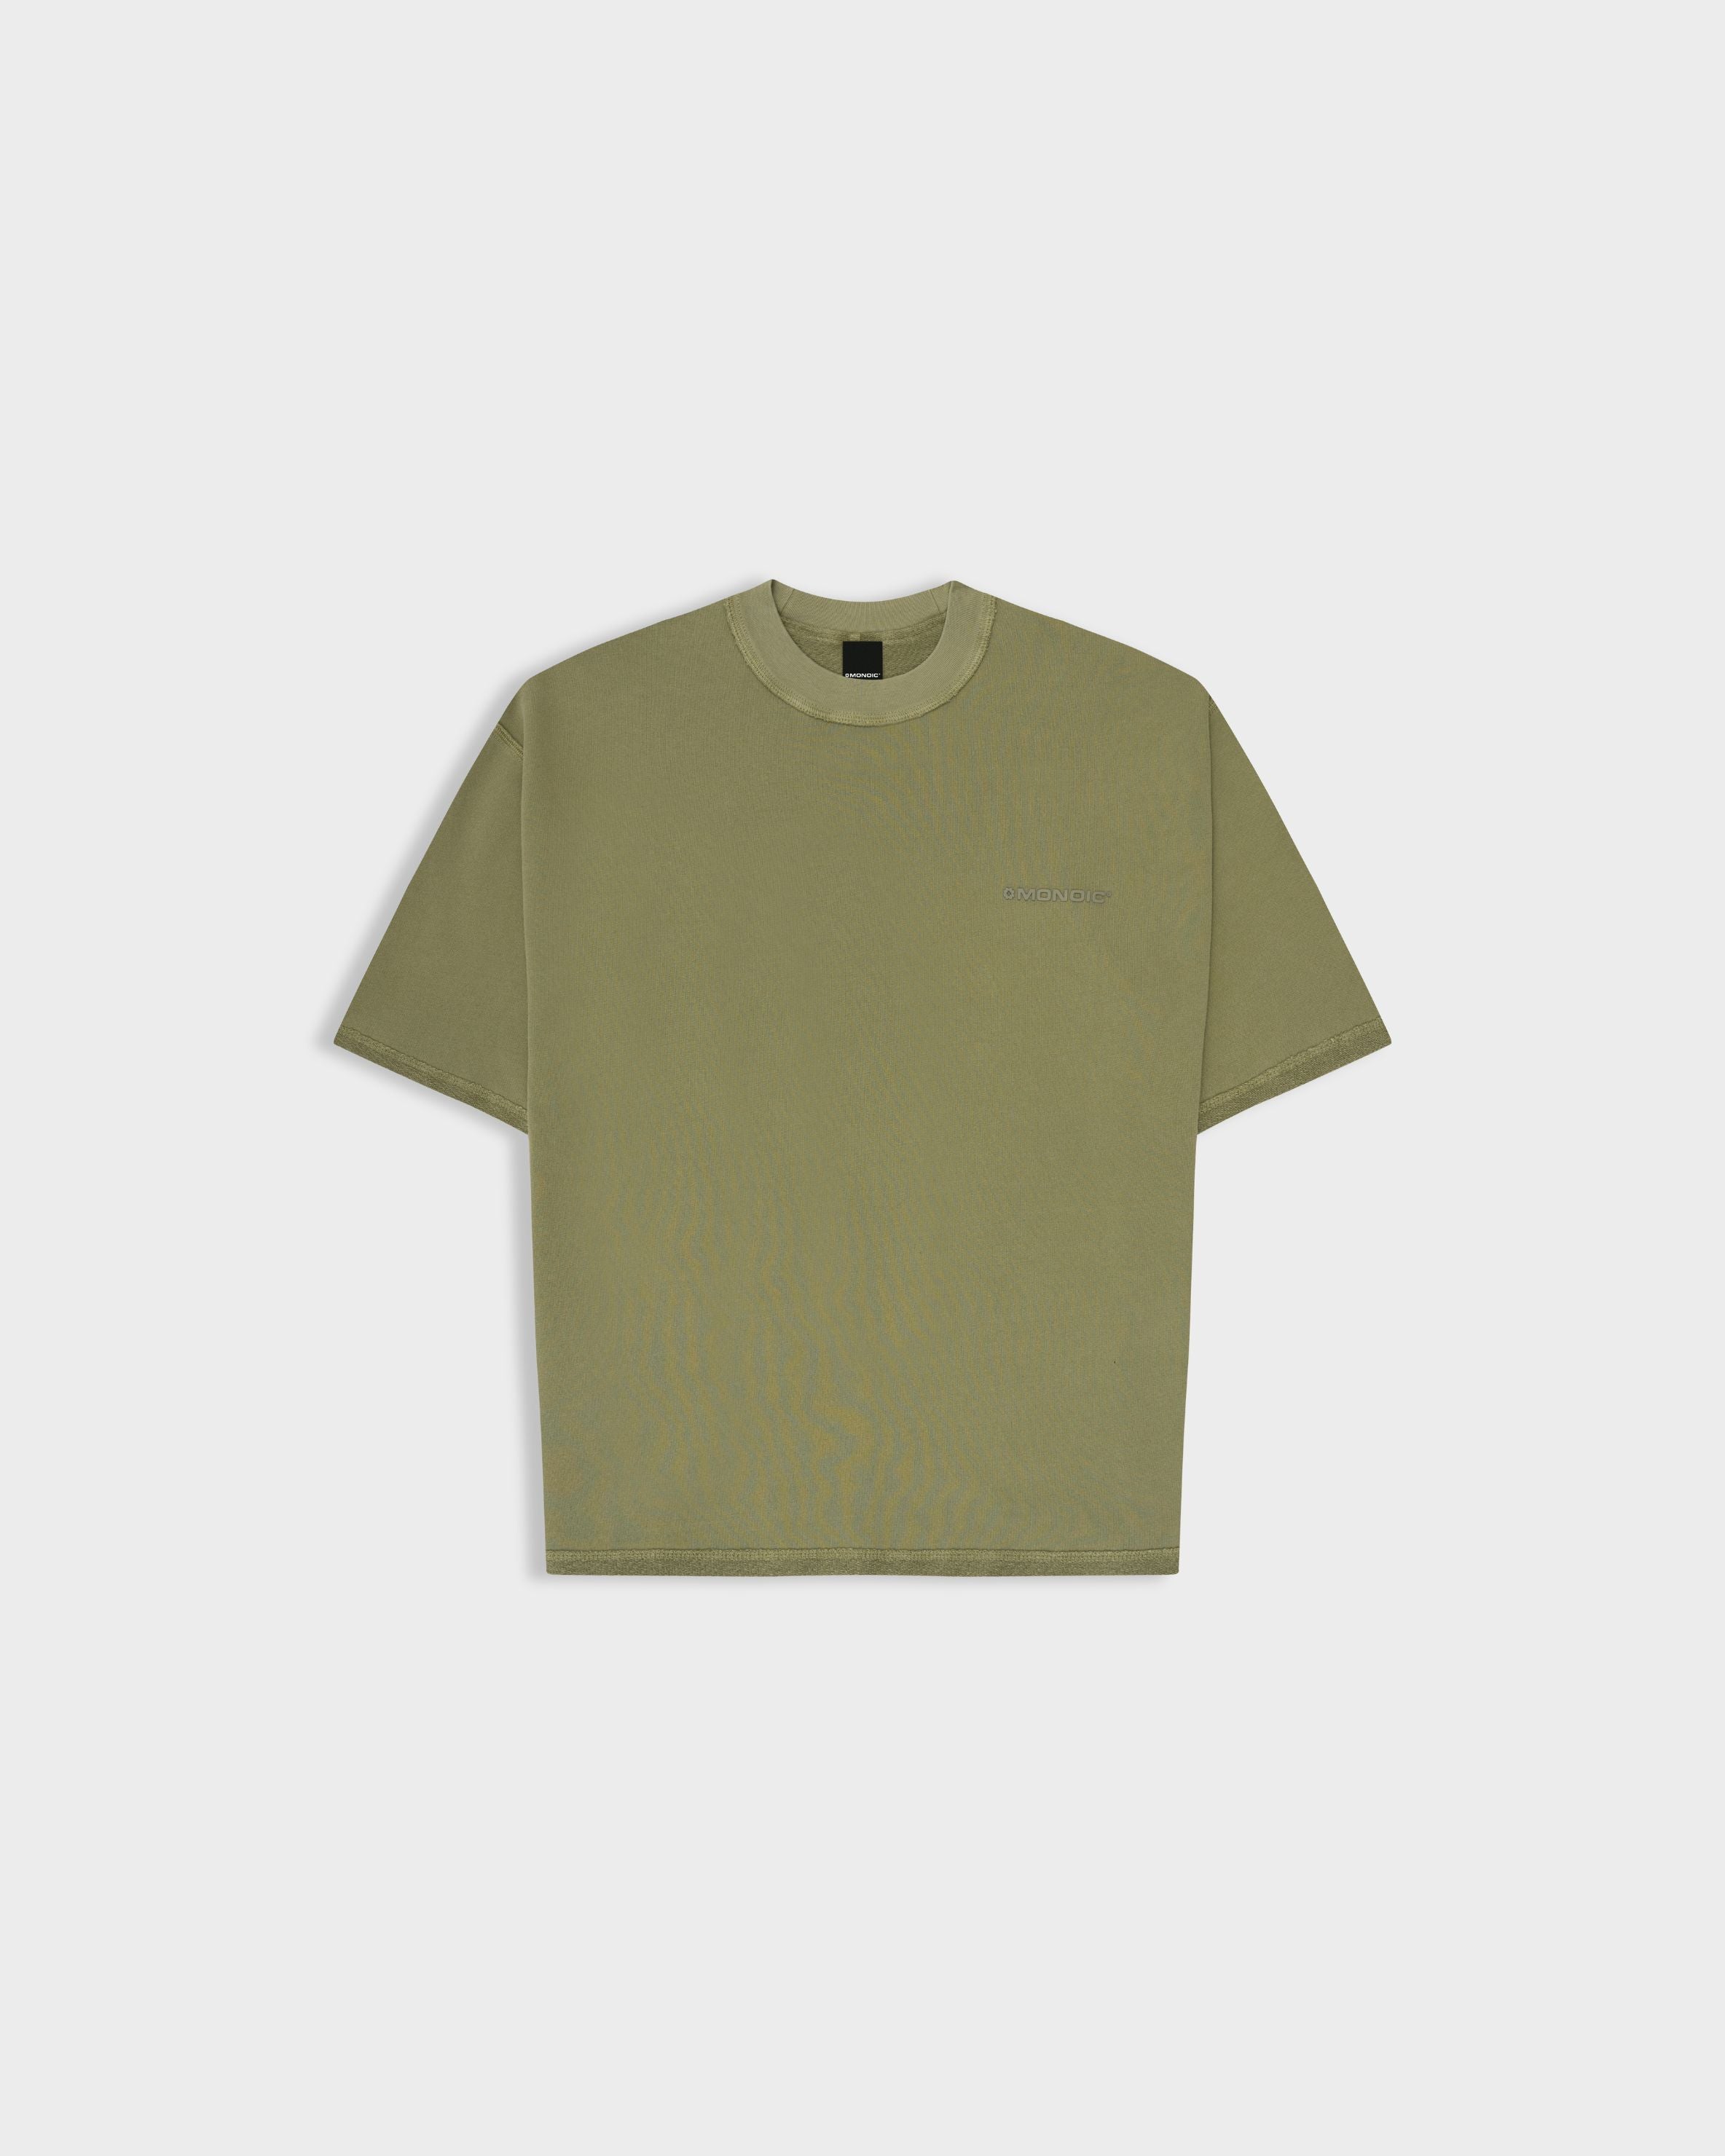 Camiseta Monoic Verde Oliva Desgastado| Camisetas Endless Dreams | Monoic Studios